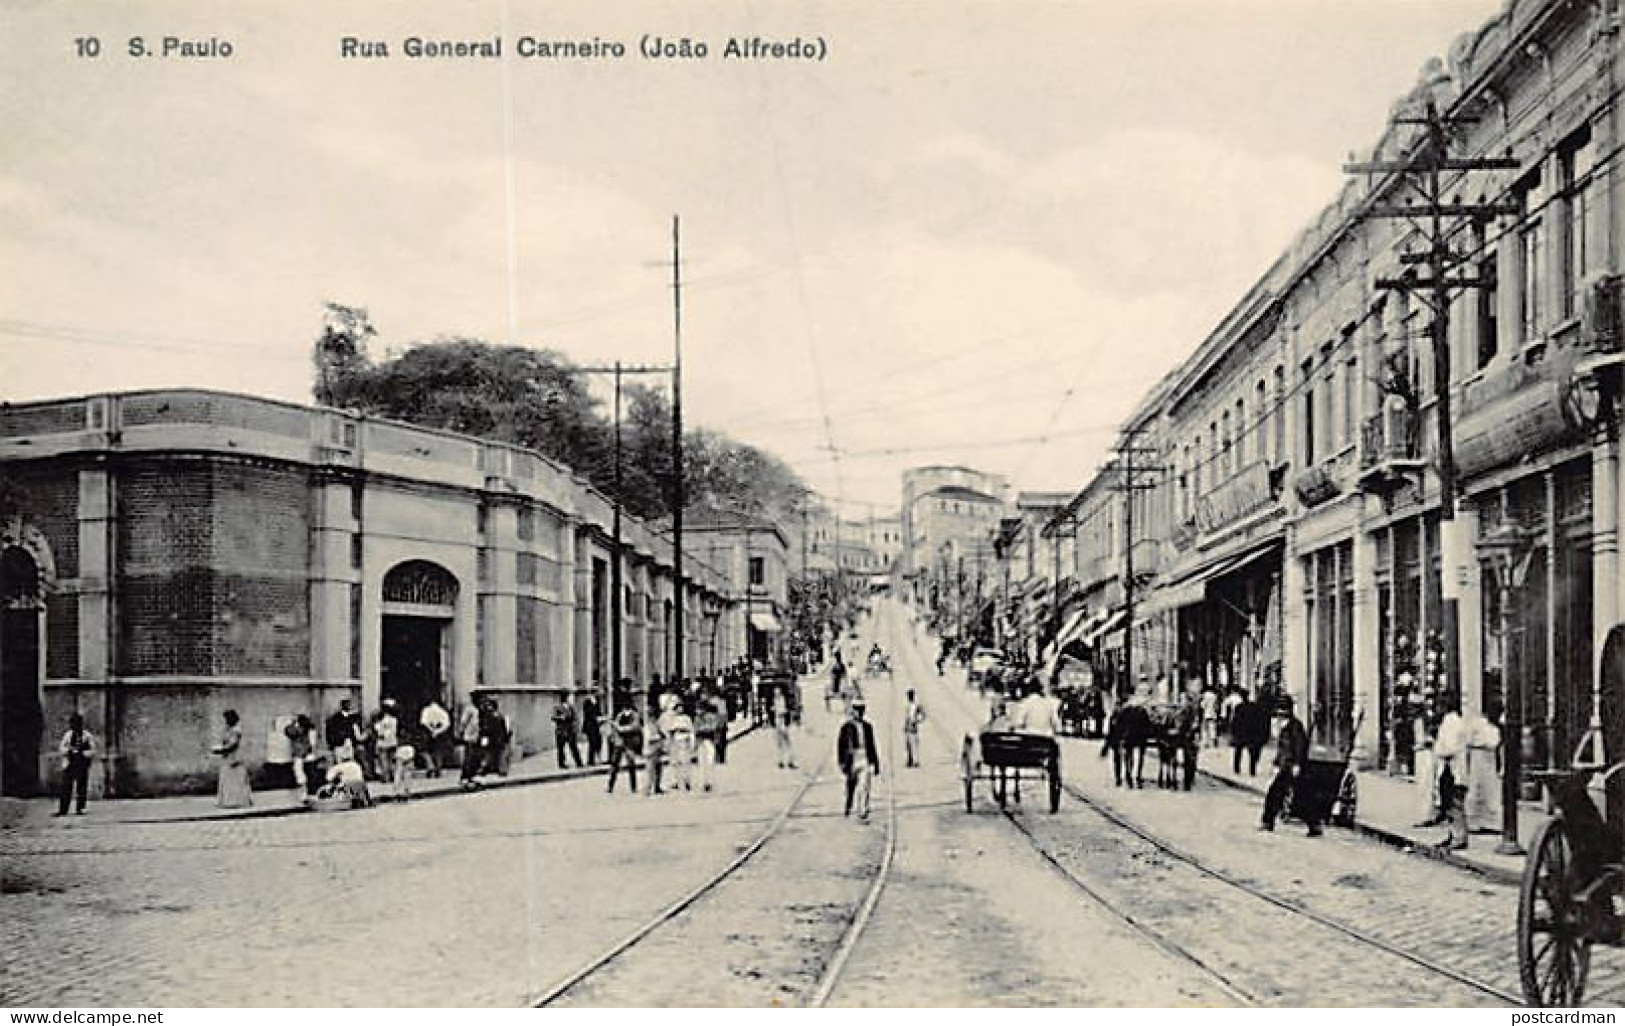 Brasil - SAO PAULO - Rua General Carneiro (Joao Alfredo) - Ed. Typ. Brasil, Rothschild & Co. 10 - São Paulo